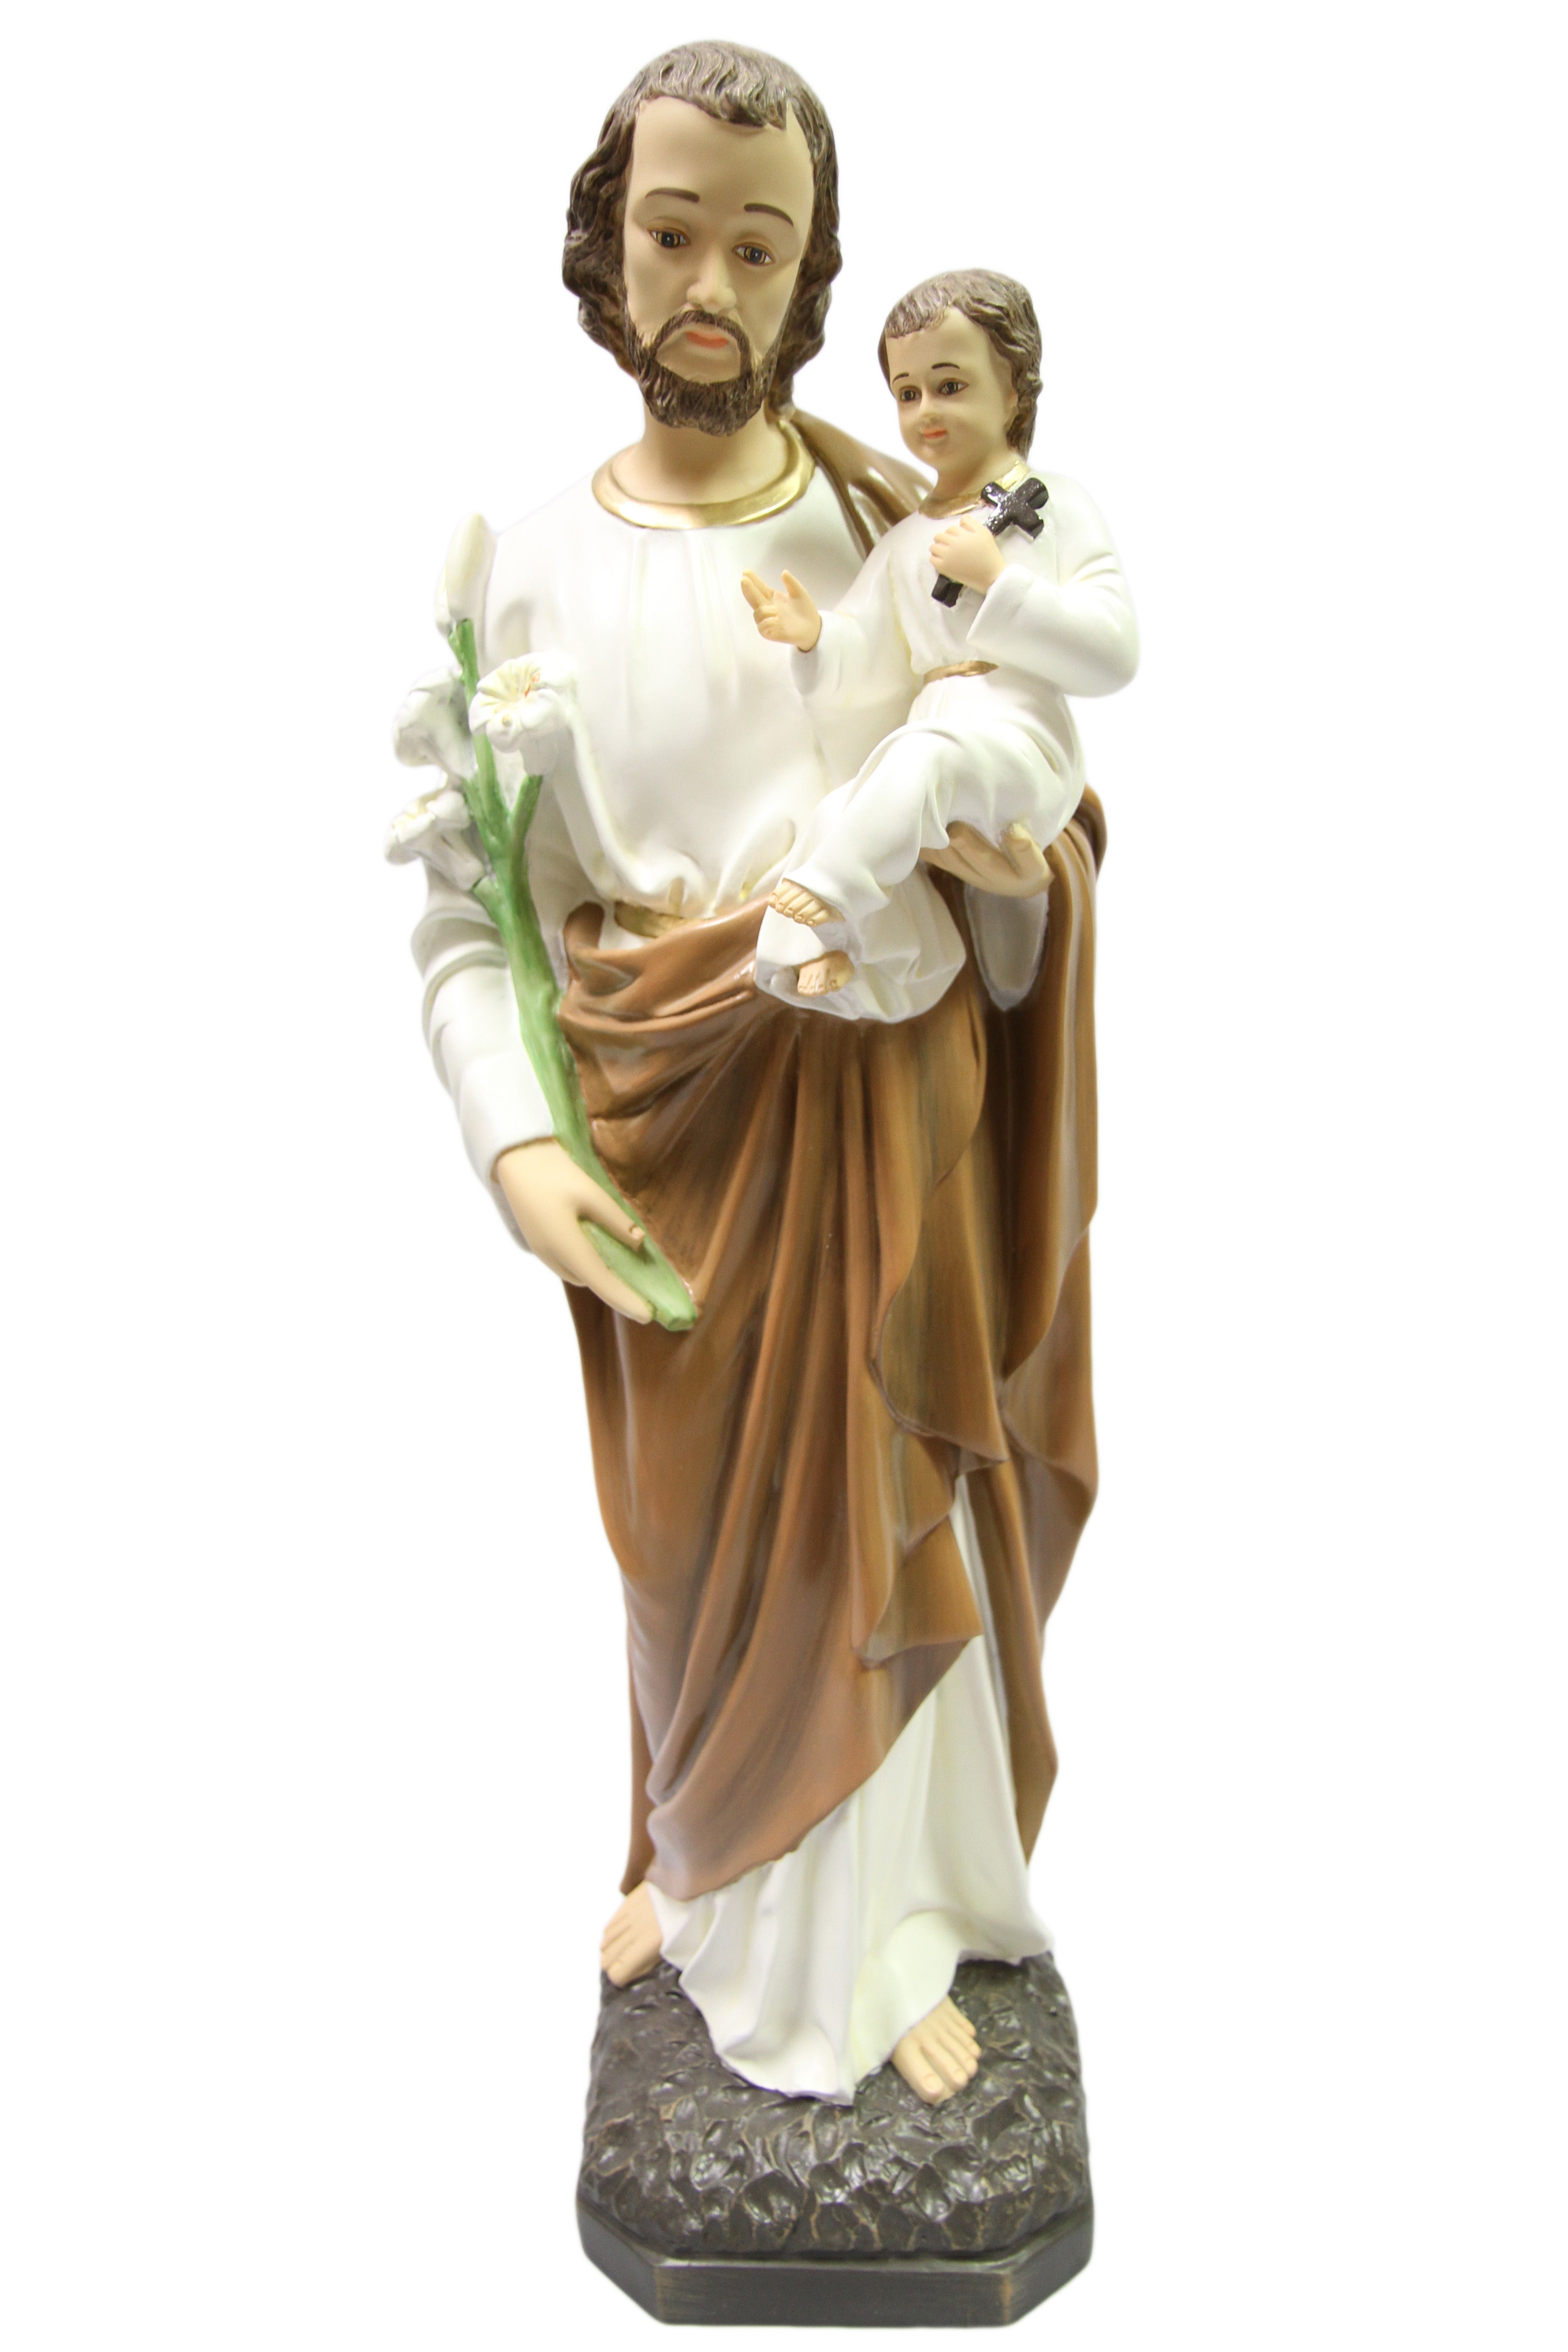 32 Inch Saint Joseph with Baby Jesus Catholic Statue Sculpture Religious Figurine